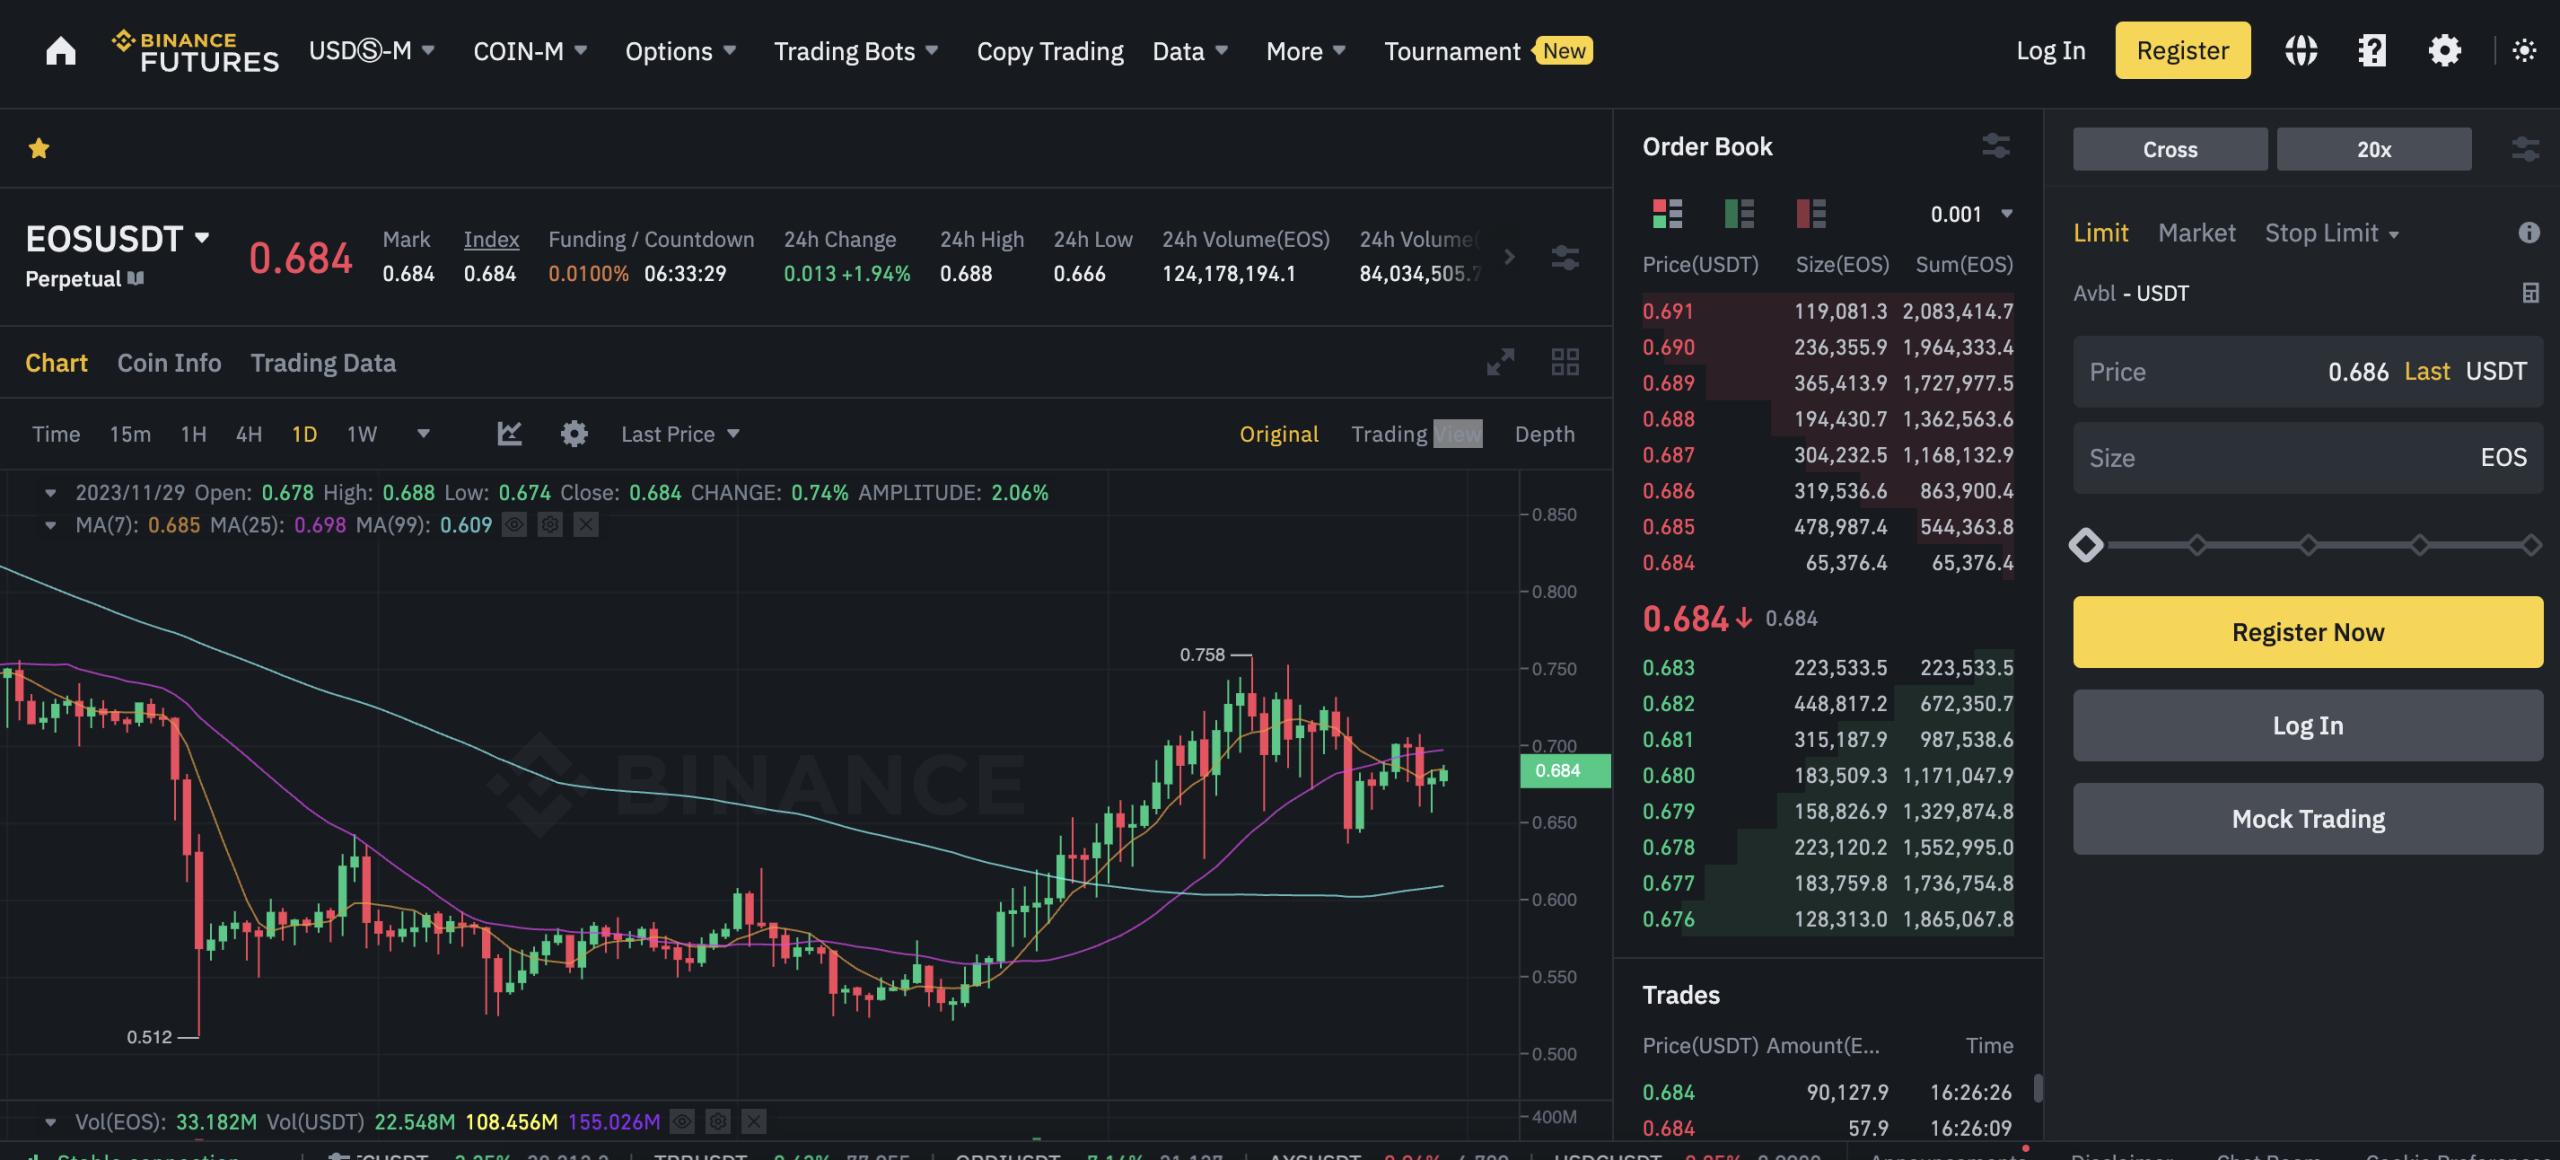 Binance fuutres trading platform